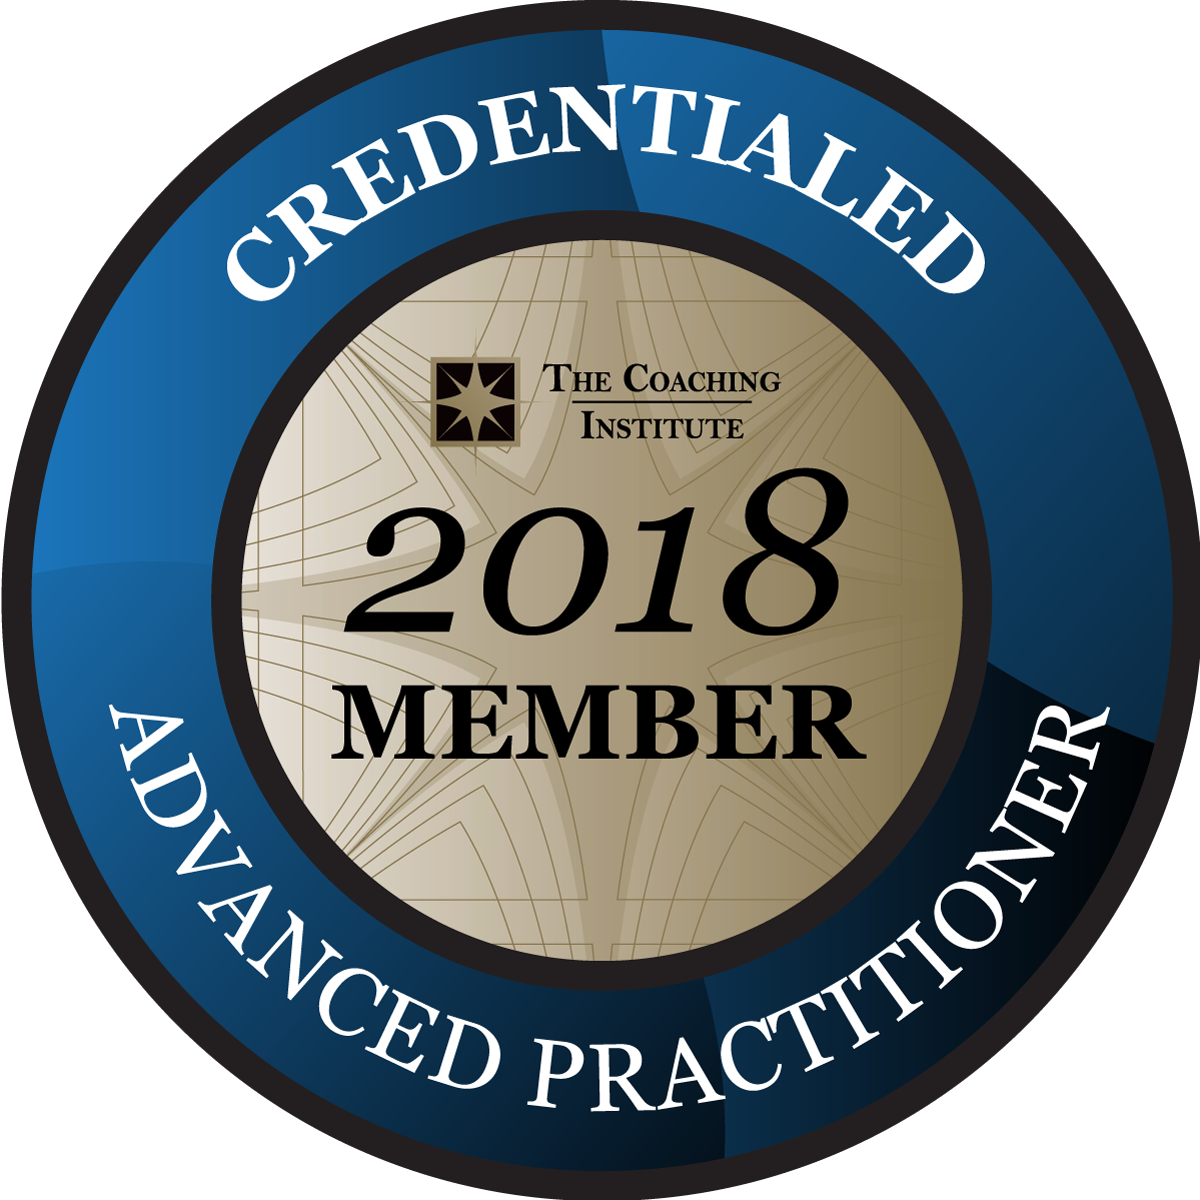 Advanced Practitioner Members 2018 Graduate member of The Coaching Institute’s Advanced Practitioner of Coaching group